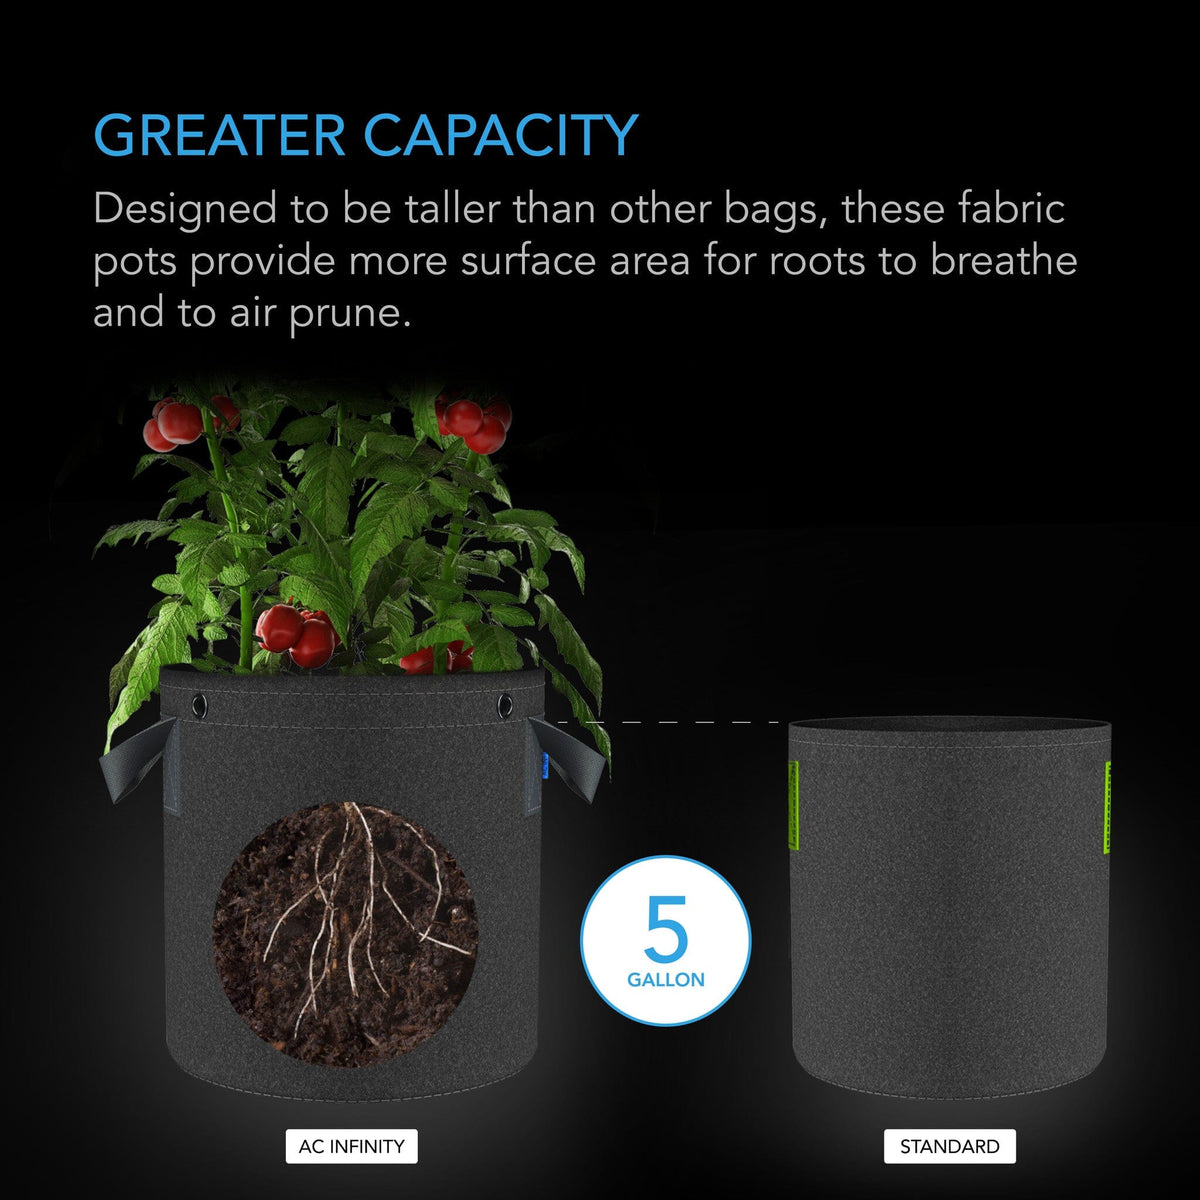 5 Gallon Greater capacity fabric pot